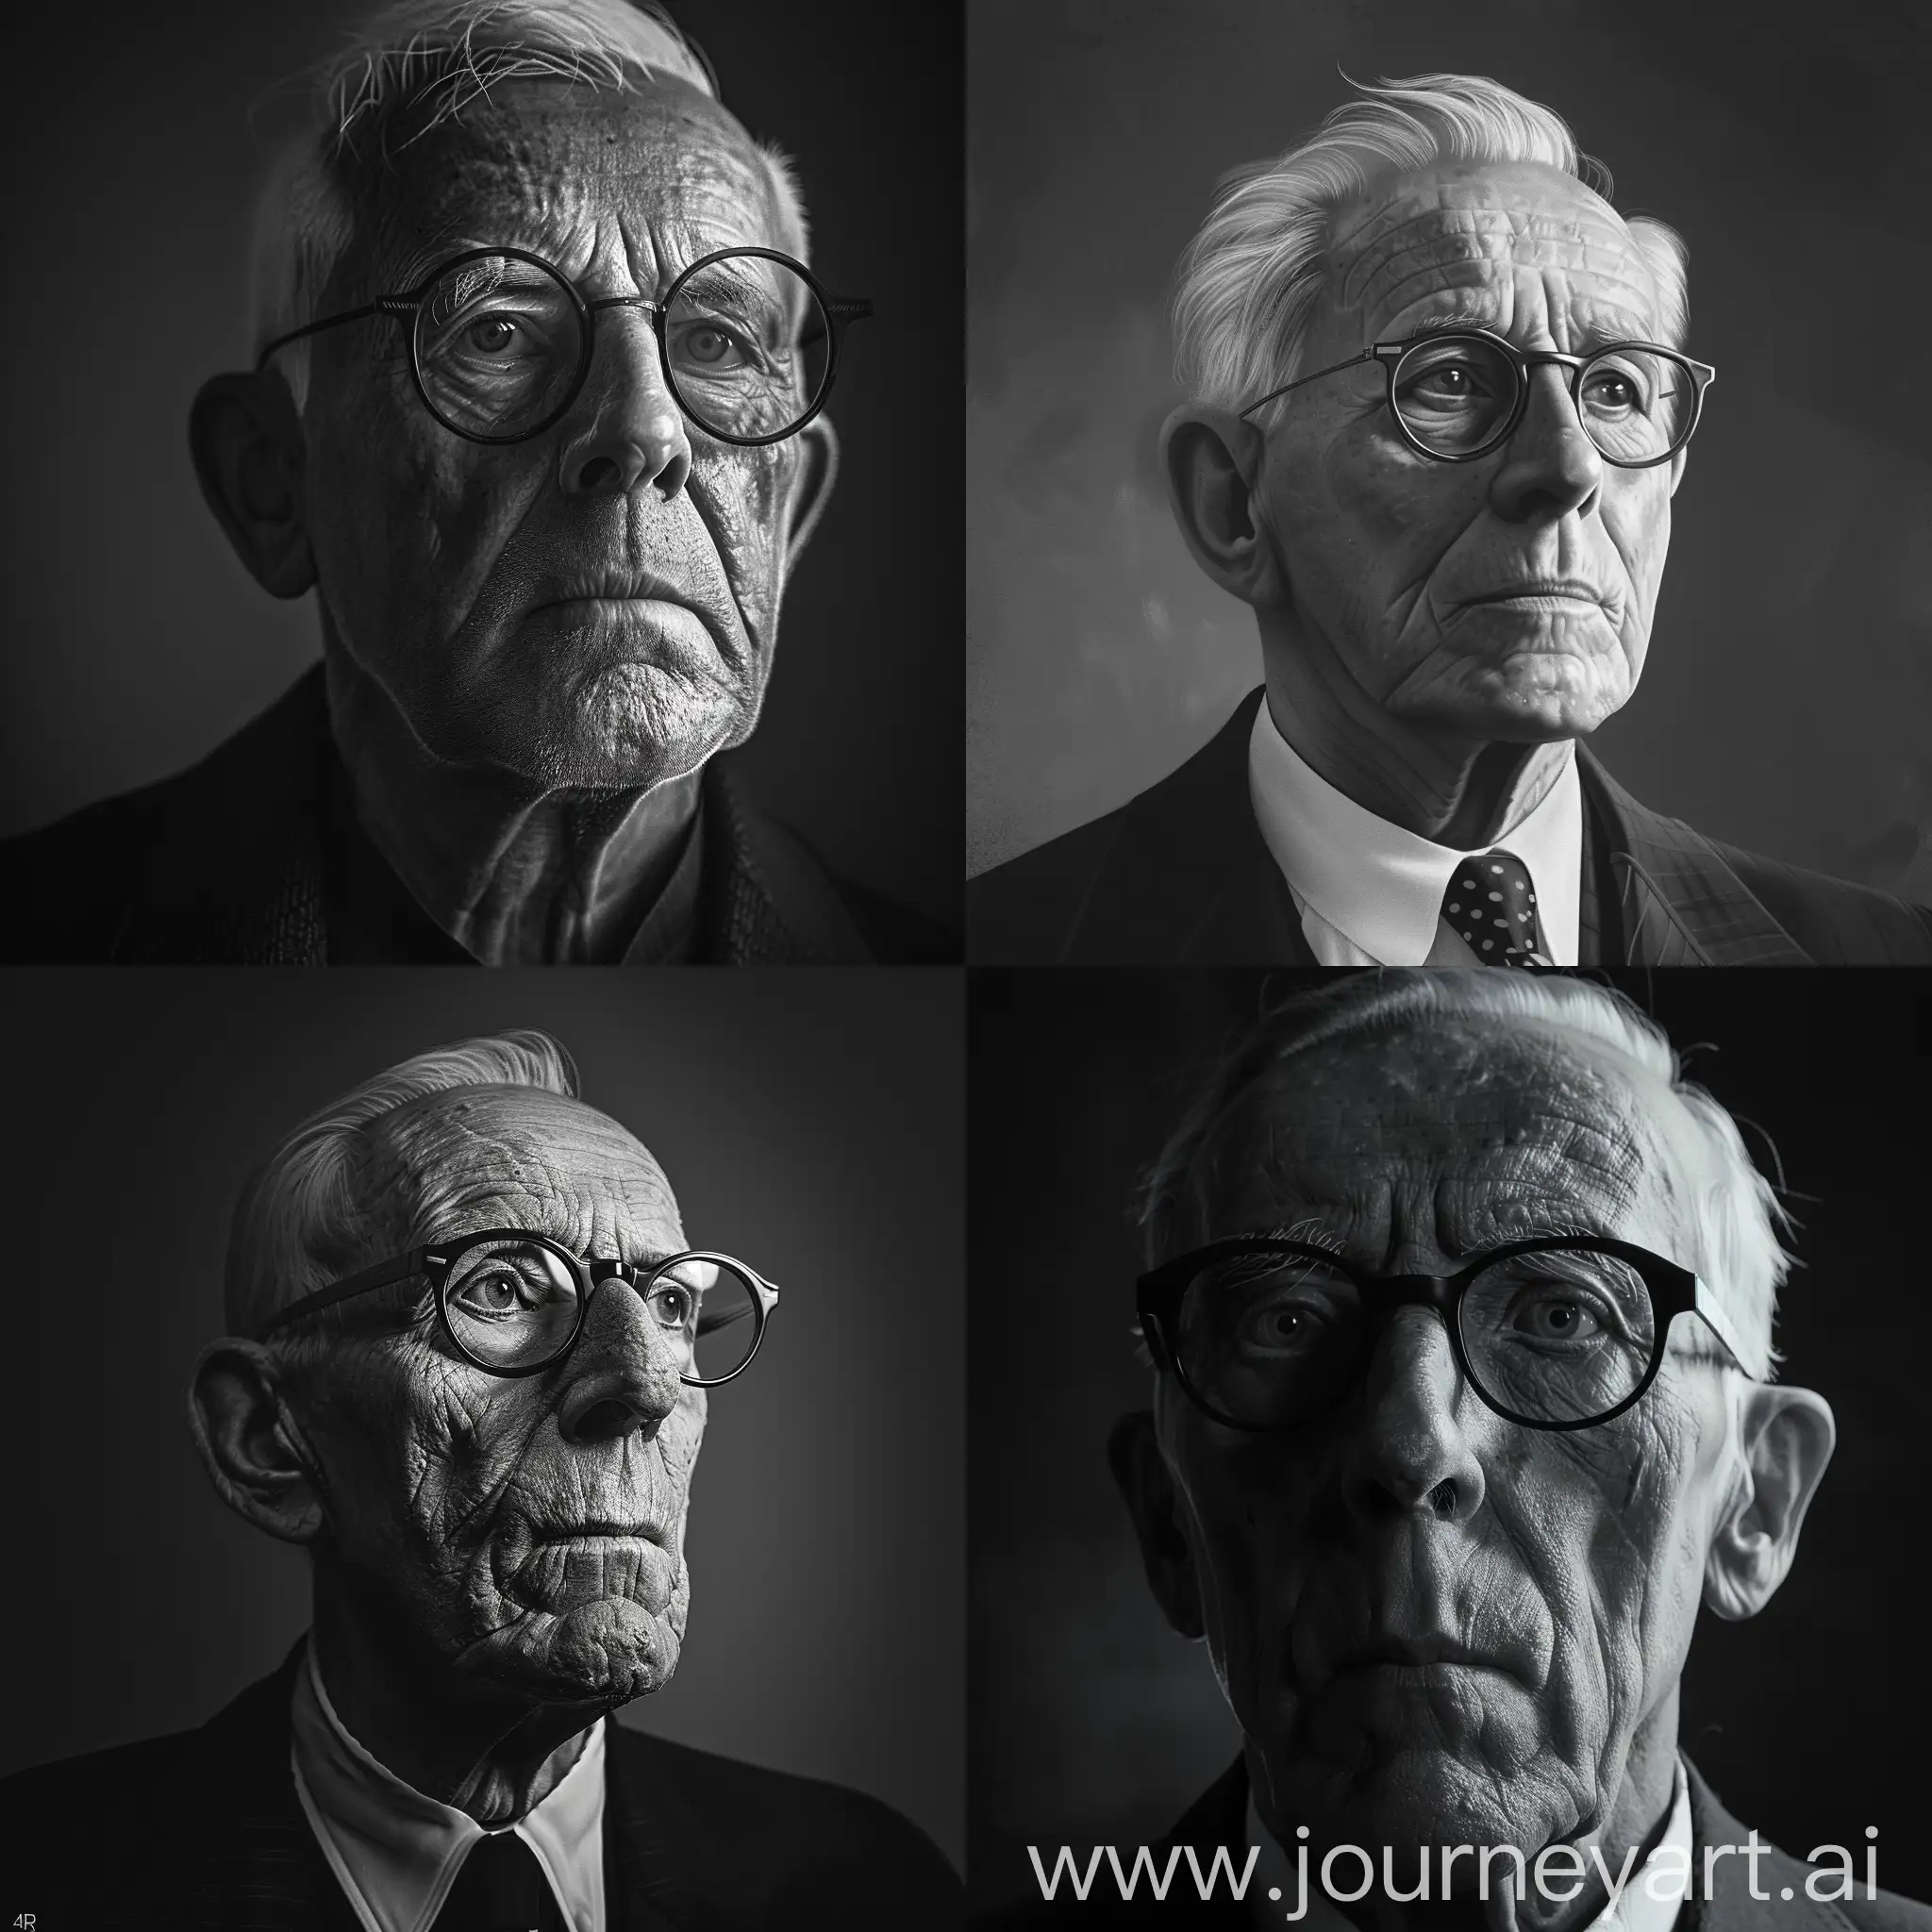 Create a photorealistic Le Corbusier portrait. Please use black and white portrait format. 4k quality.